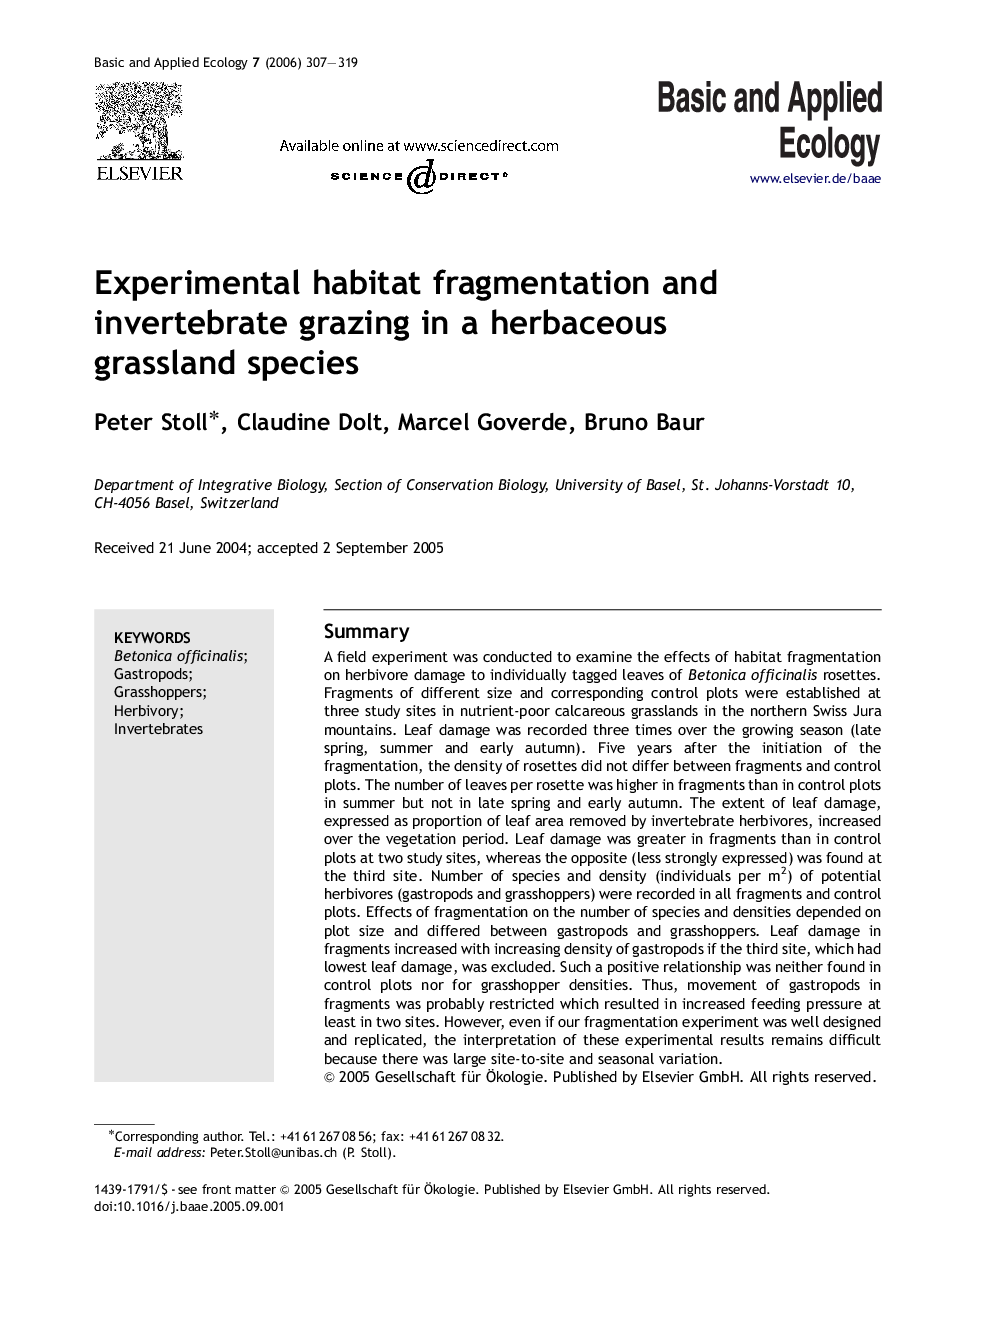 Experimental habitat fragmentation and invertebrate grazing in a herbaceous grassland species